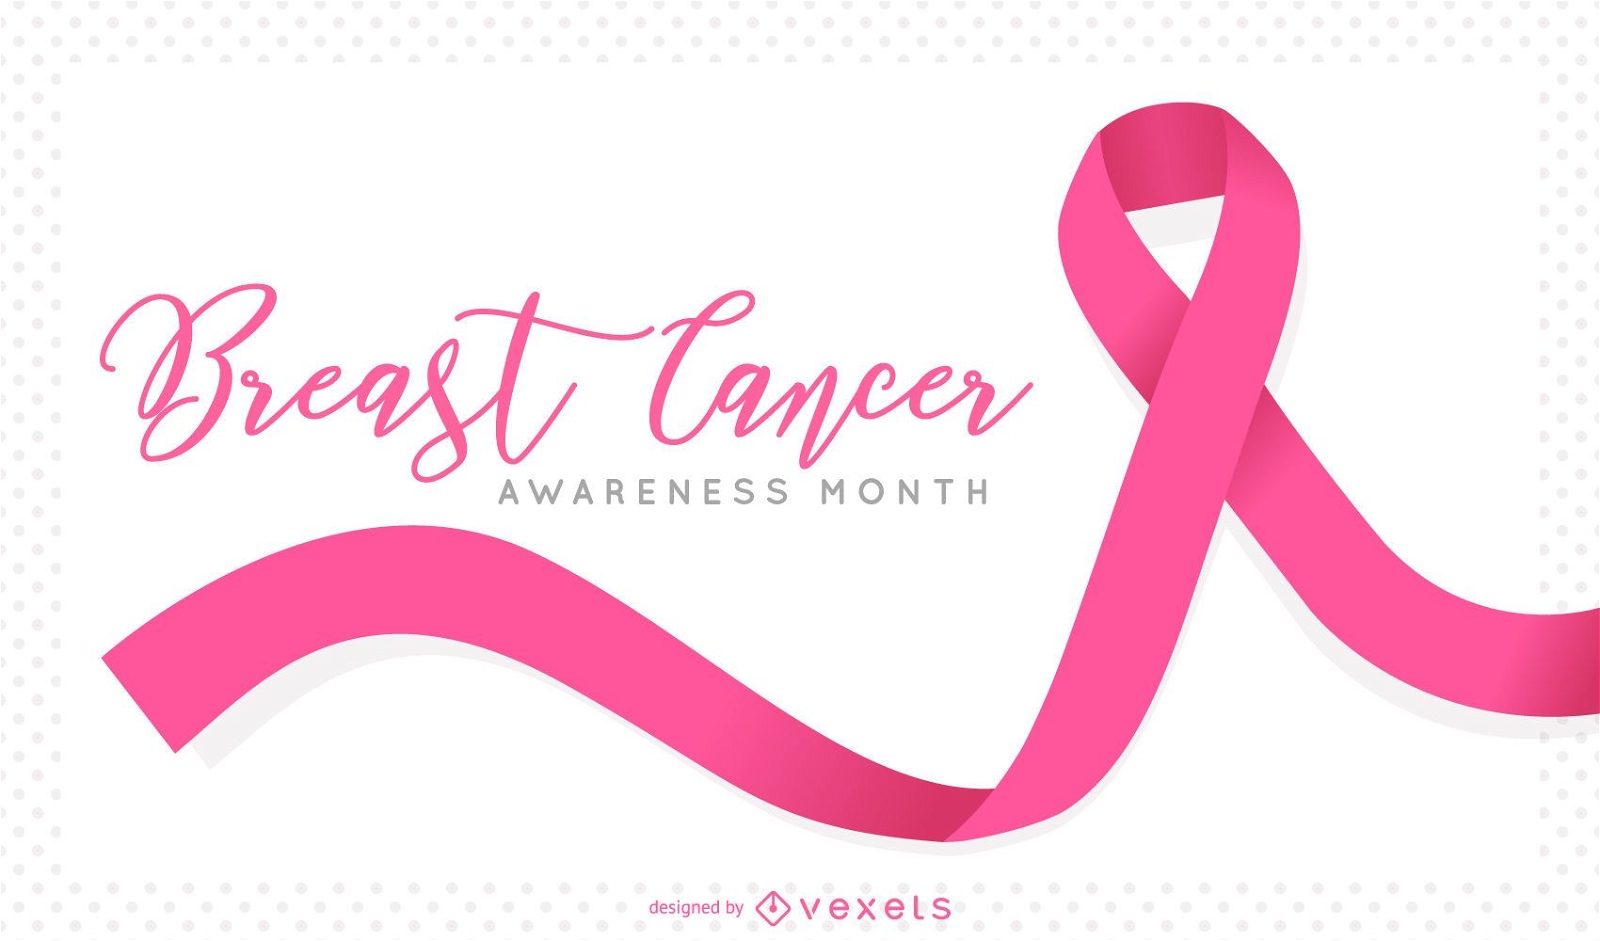 Breast cancer awareness month design Vector download ...